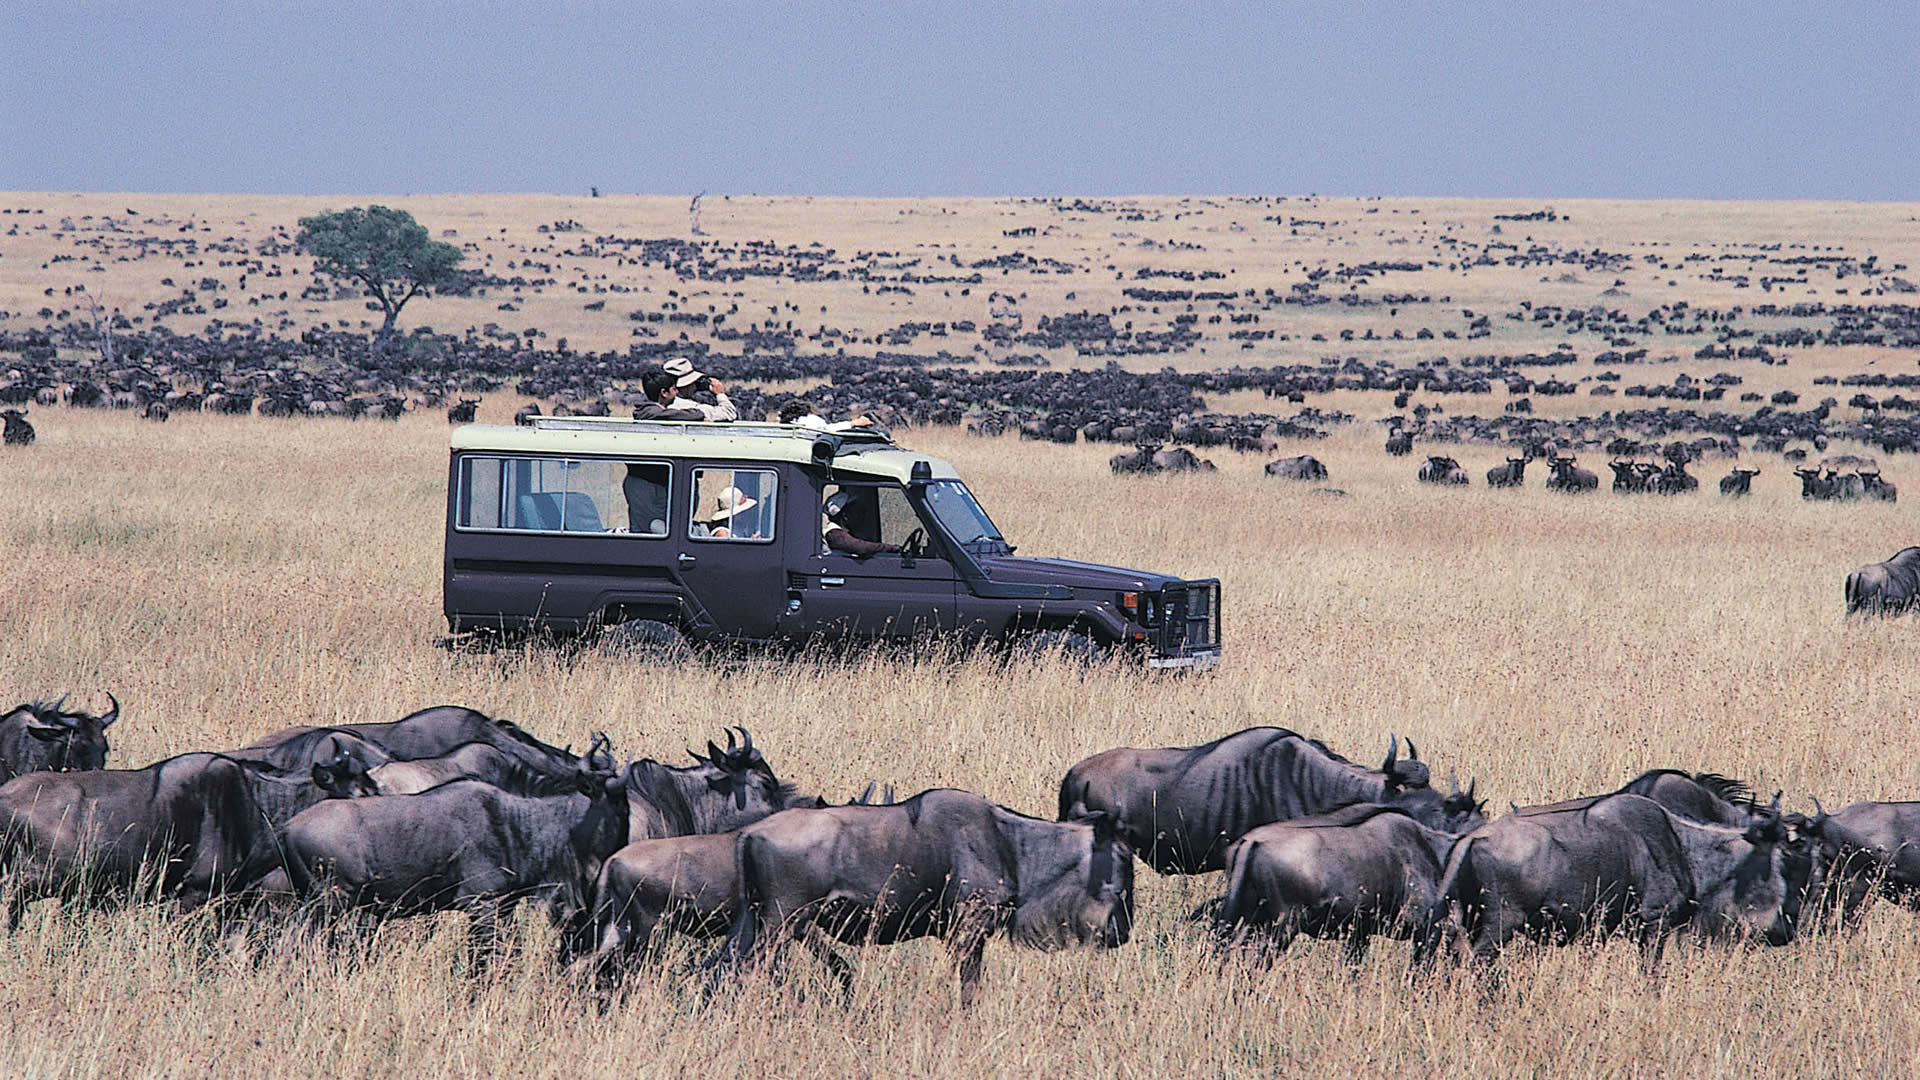 Maasai Mara or Amboseli